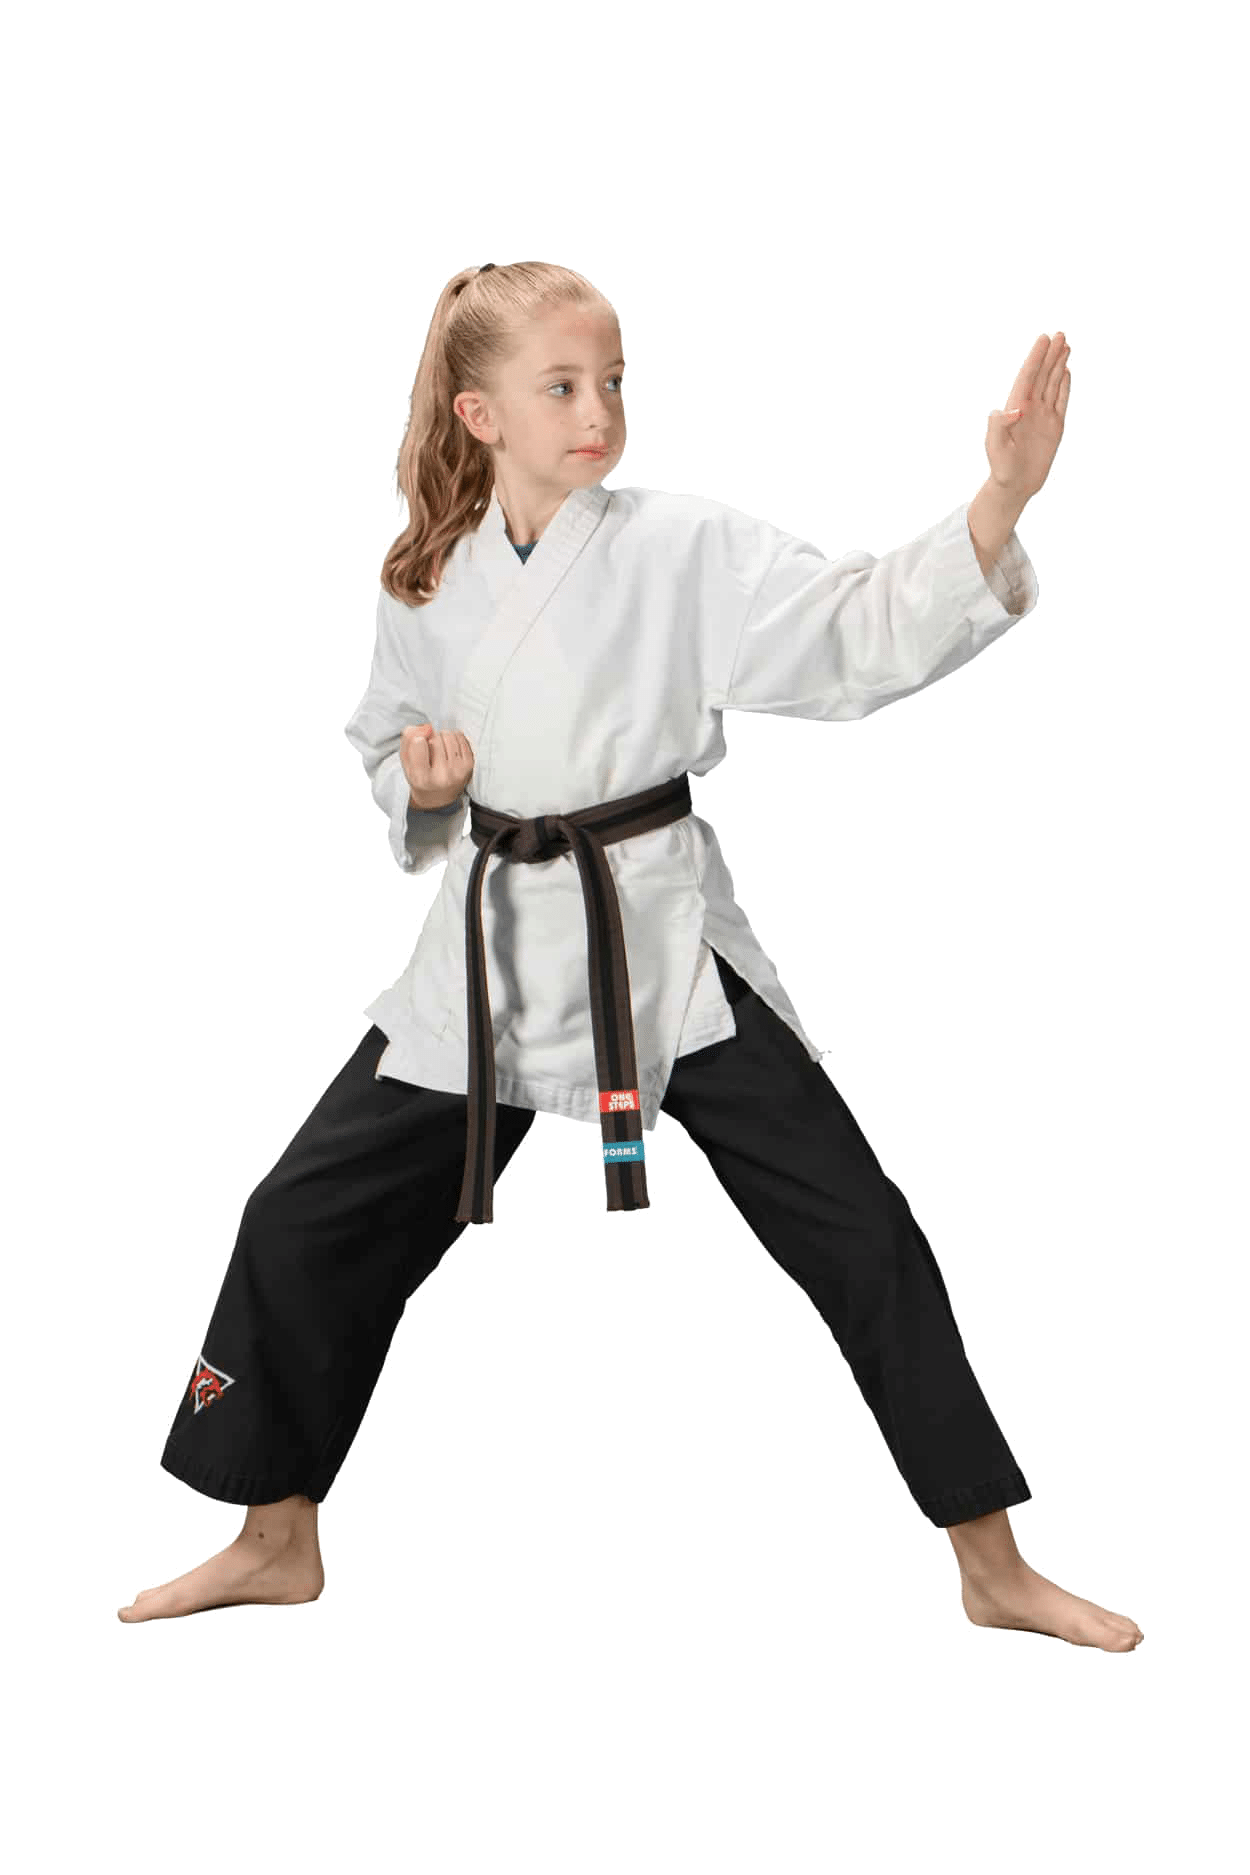 Greg Roy's Martial Arts Academy Home School Program: ages 6+